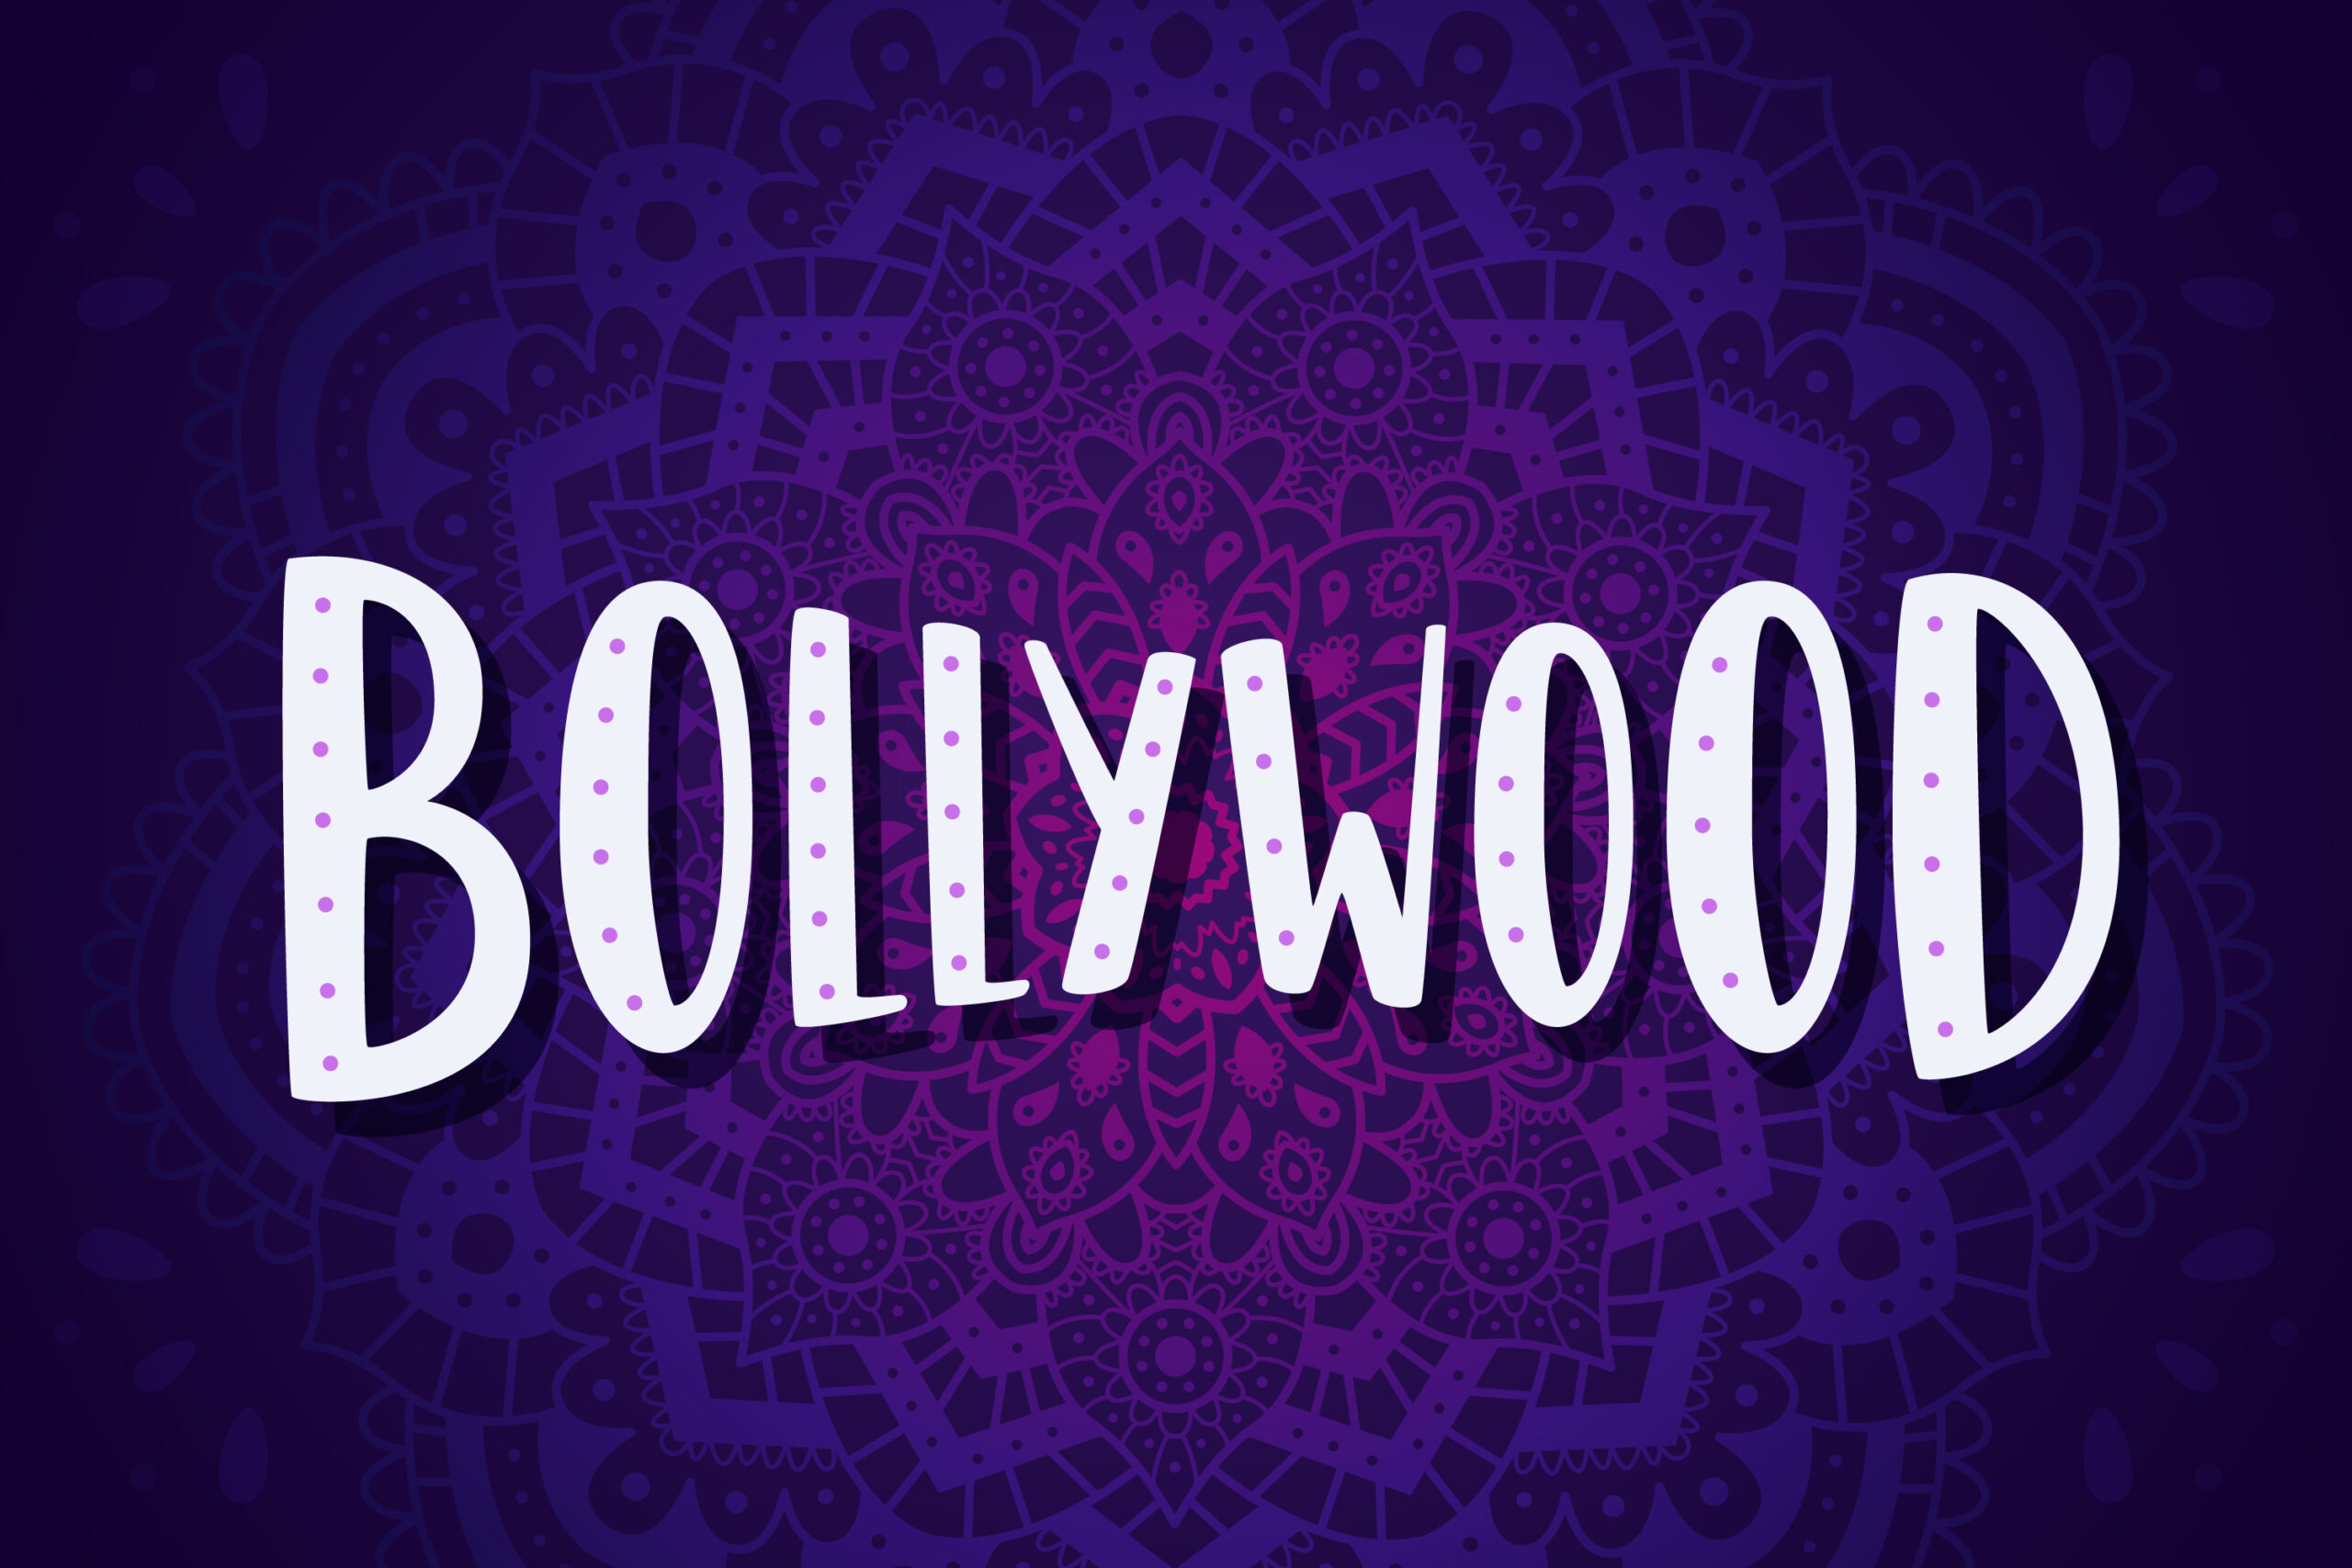 Bollywood Films